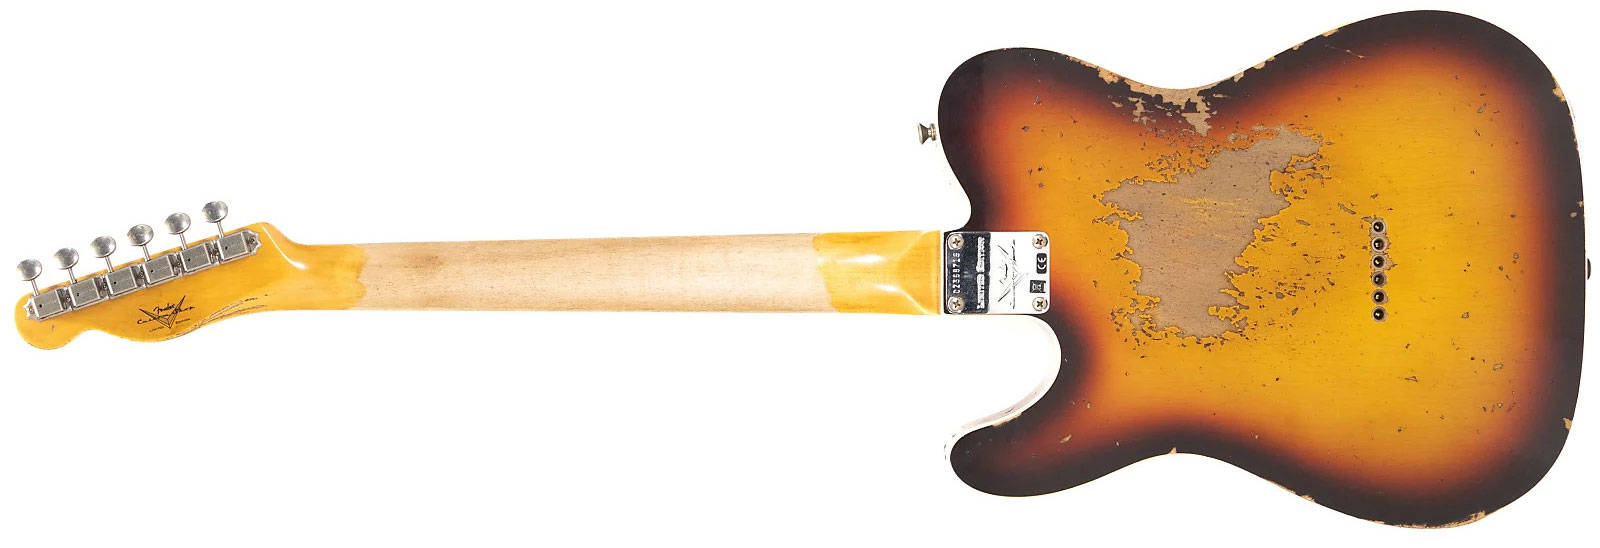 Fender Custom Shop Tele 1960 2s Ht Rw - Heavy Relic Chocolate 3-color Sunburst - Tel shape electric guitar - Variation 2